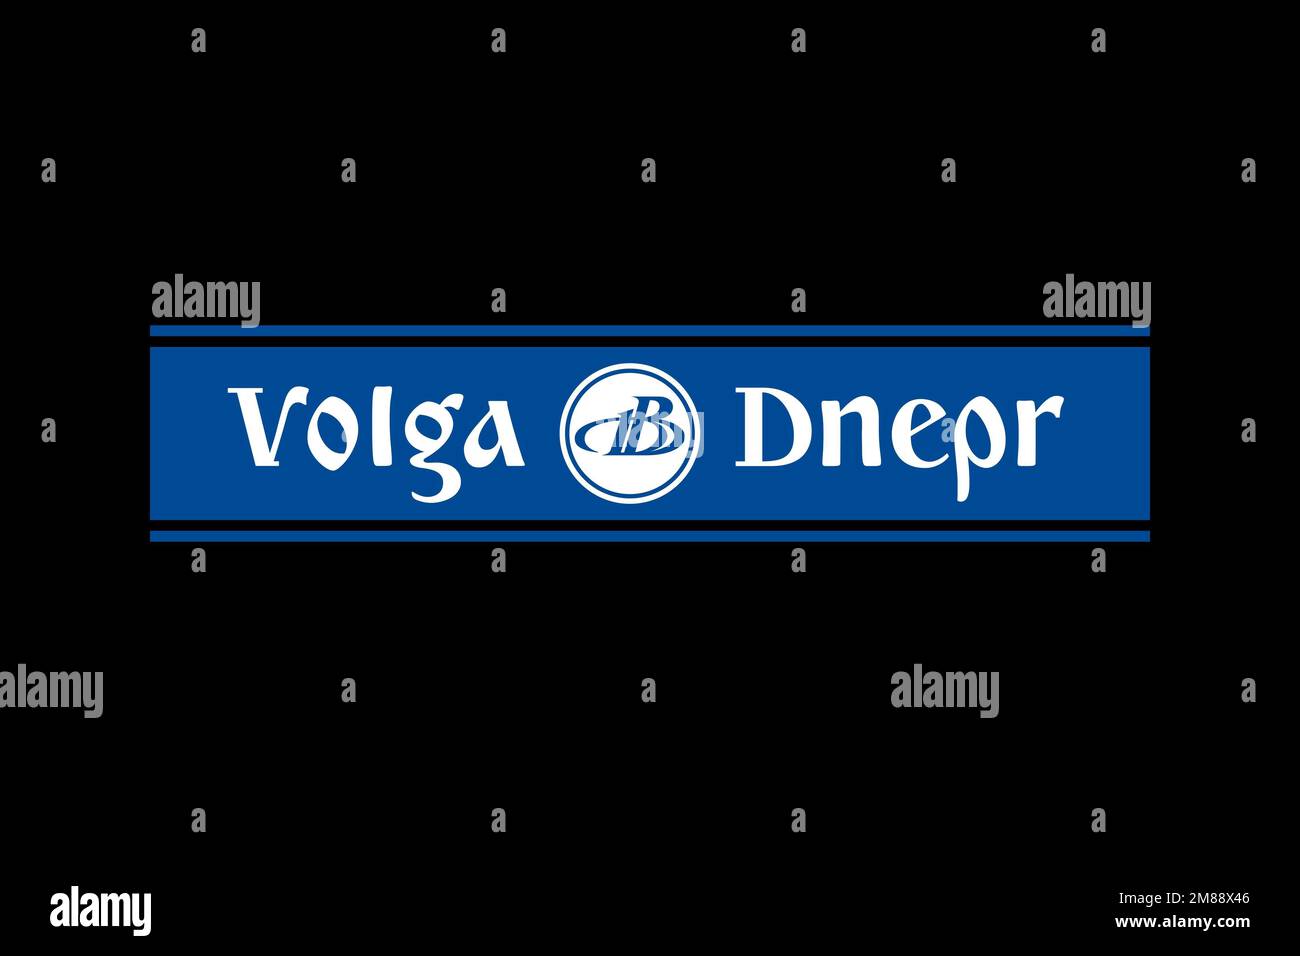 Volga Dnepr Airline, logo, fond noir Banque D'Images